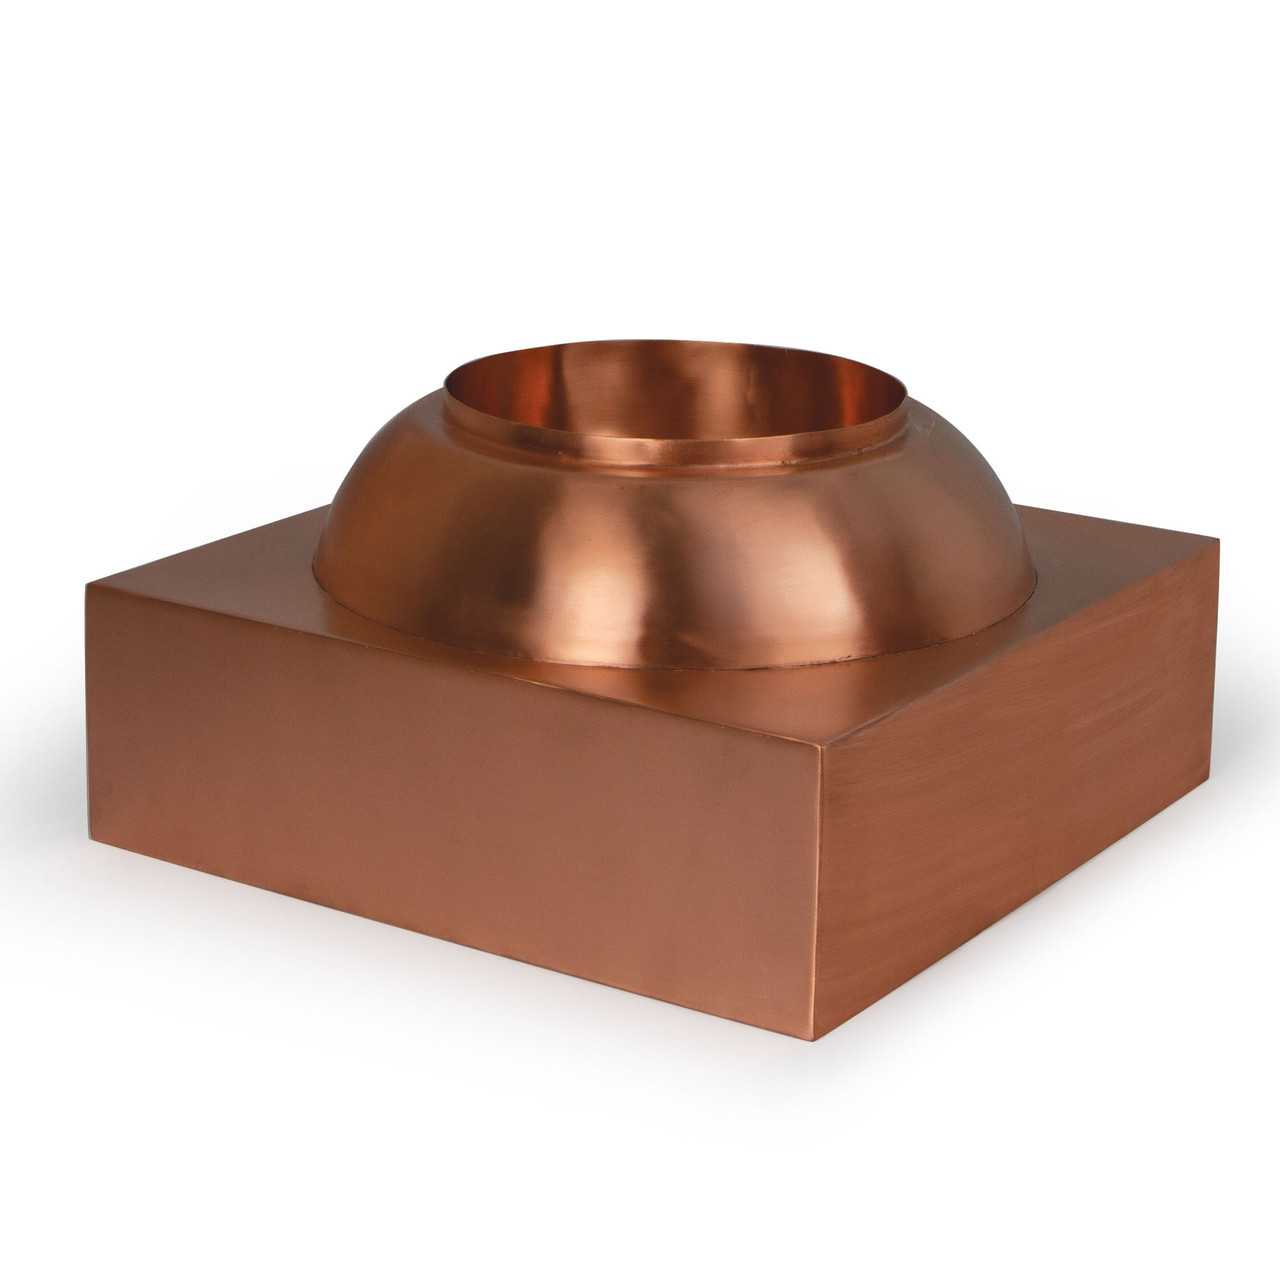 Atlantic Copper Bowl Pedestal